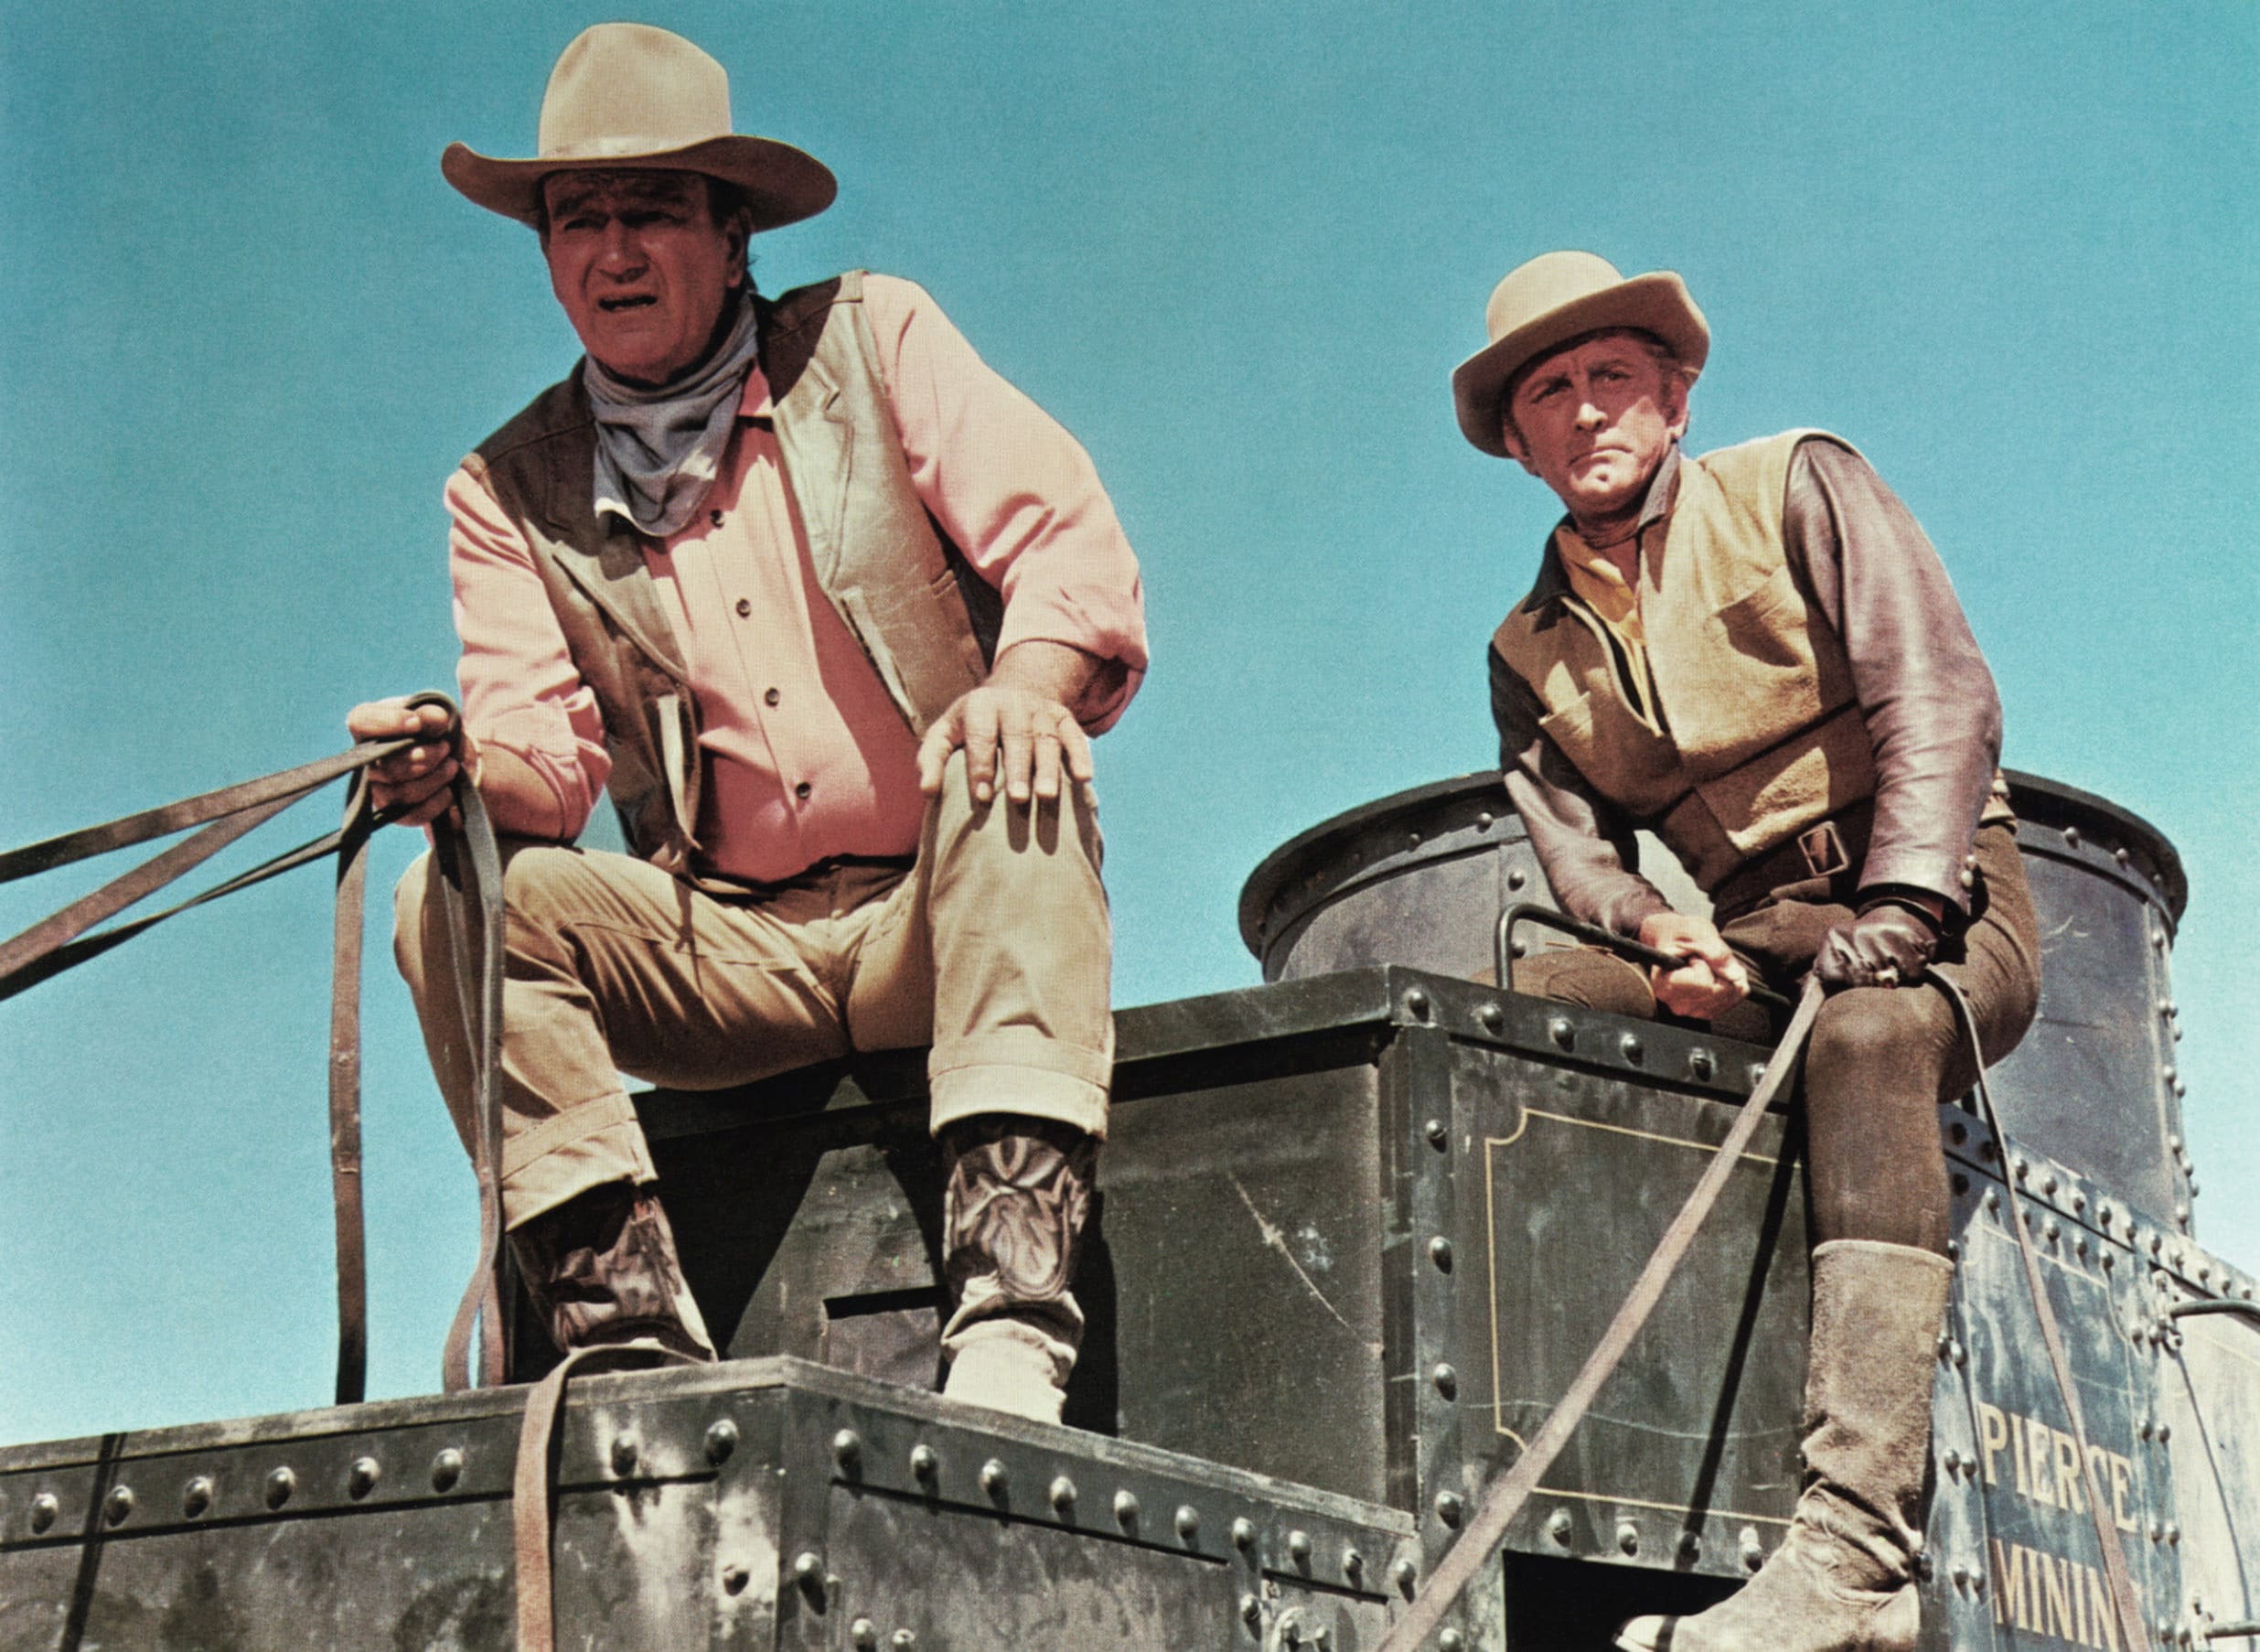 THE WAR WAGON, from left, John Wayne, Kirk Douglas, 1967